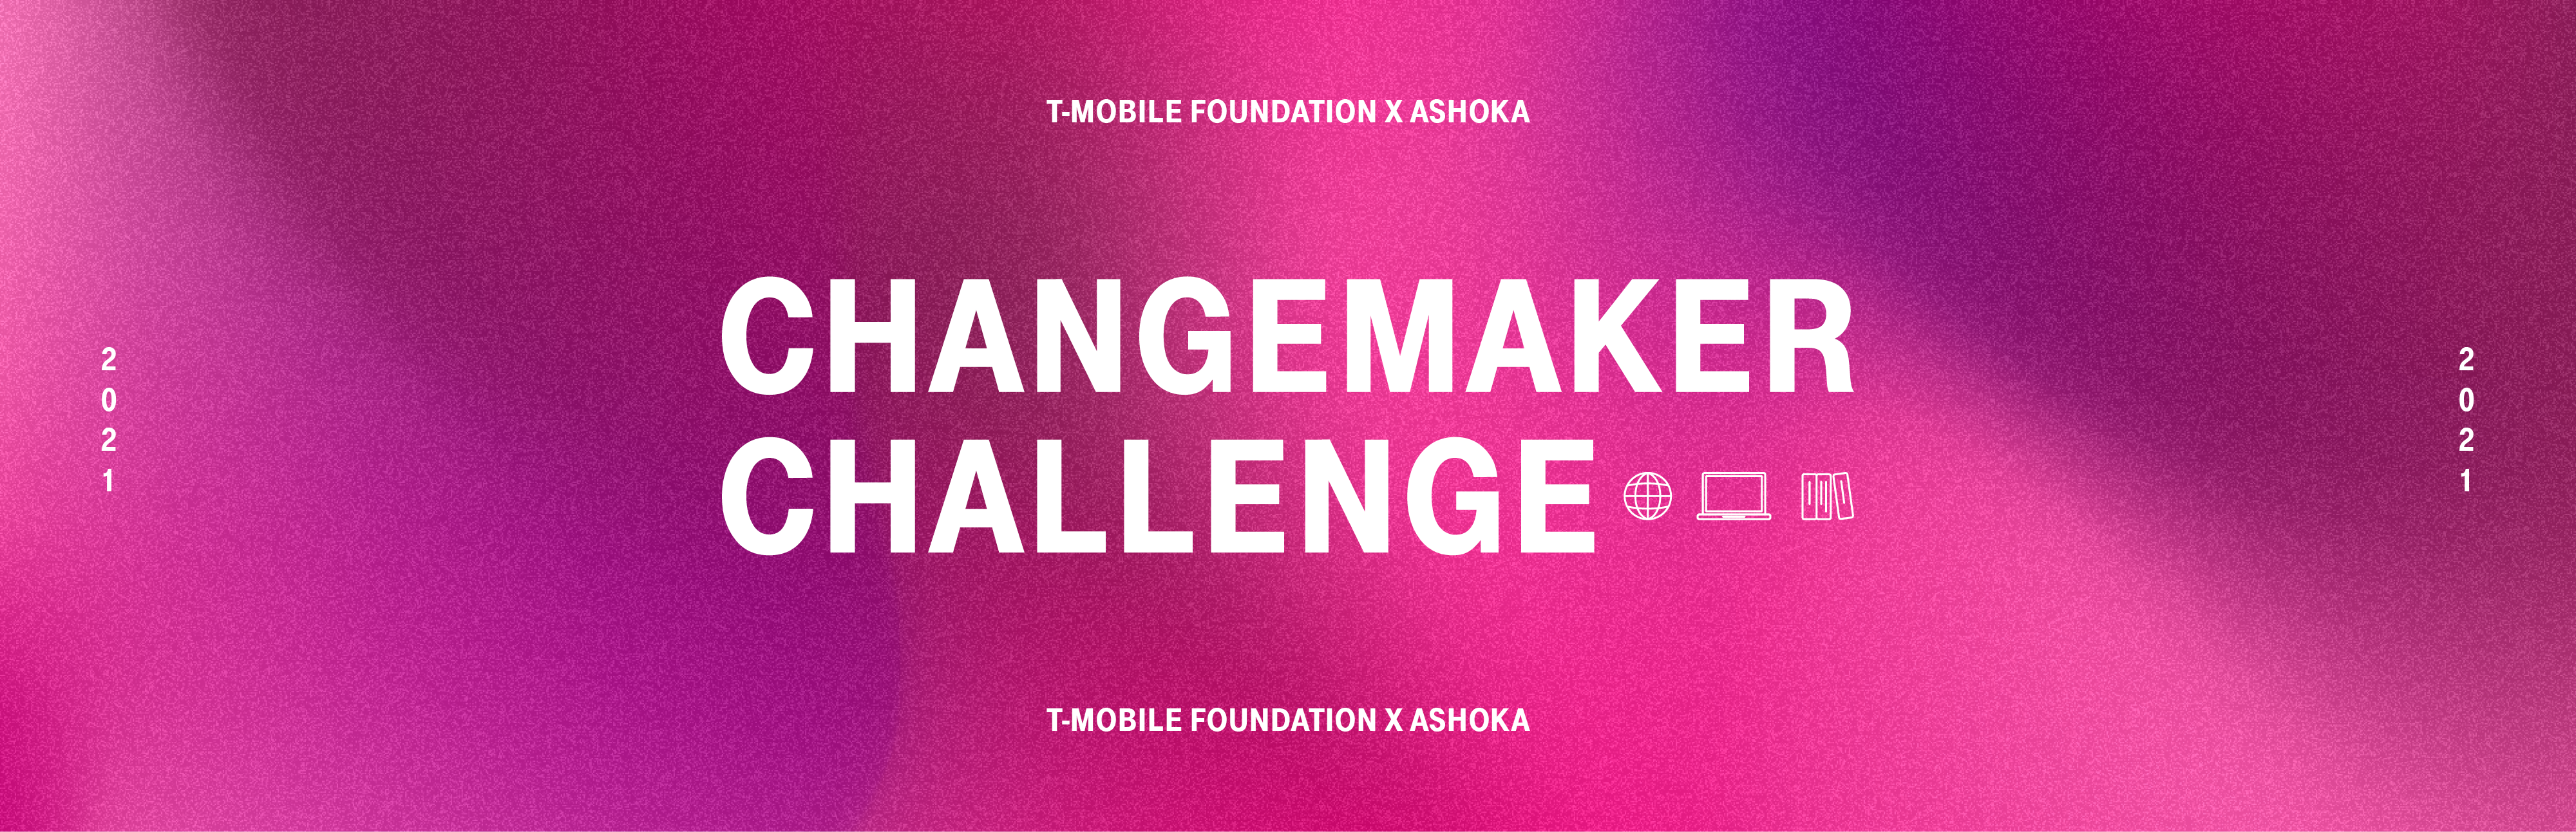 T-Mobile Changemaker Challenge Banner